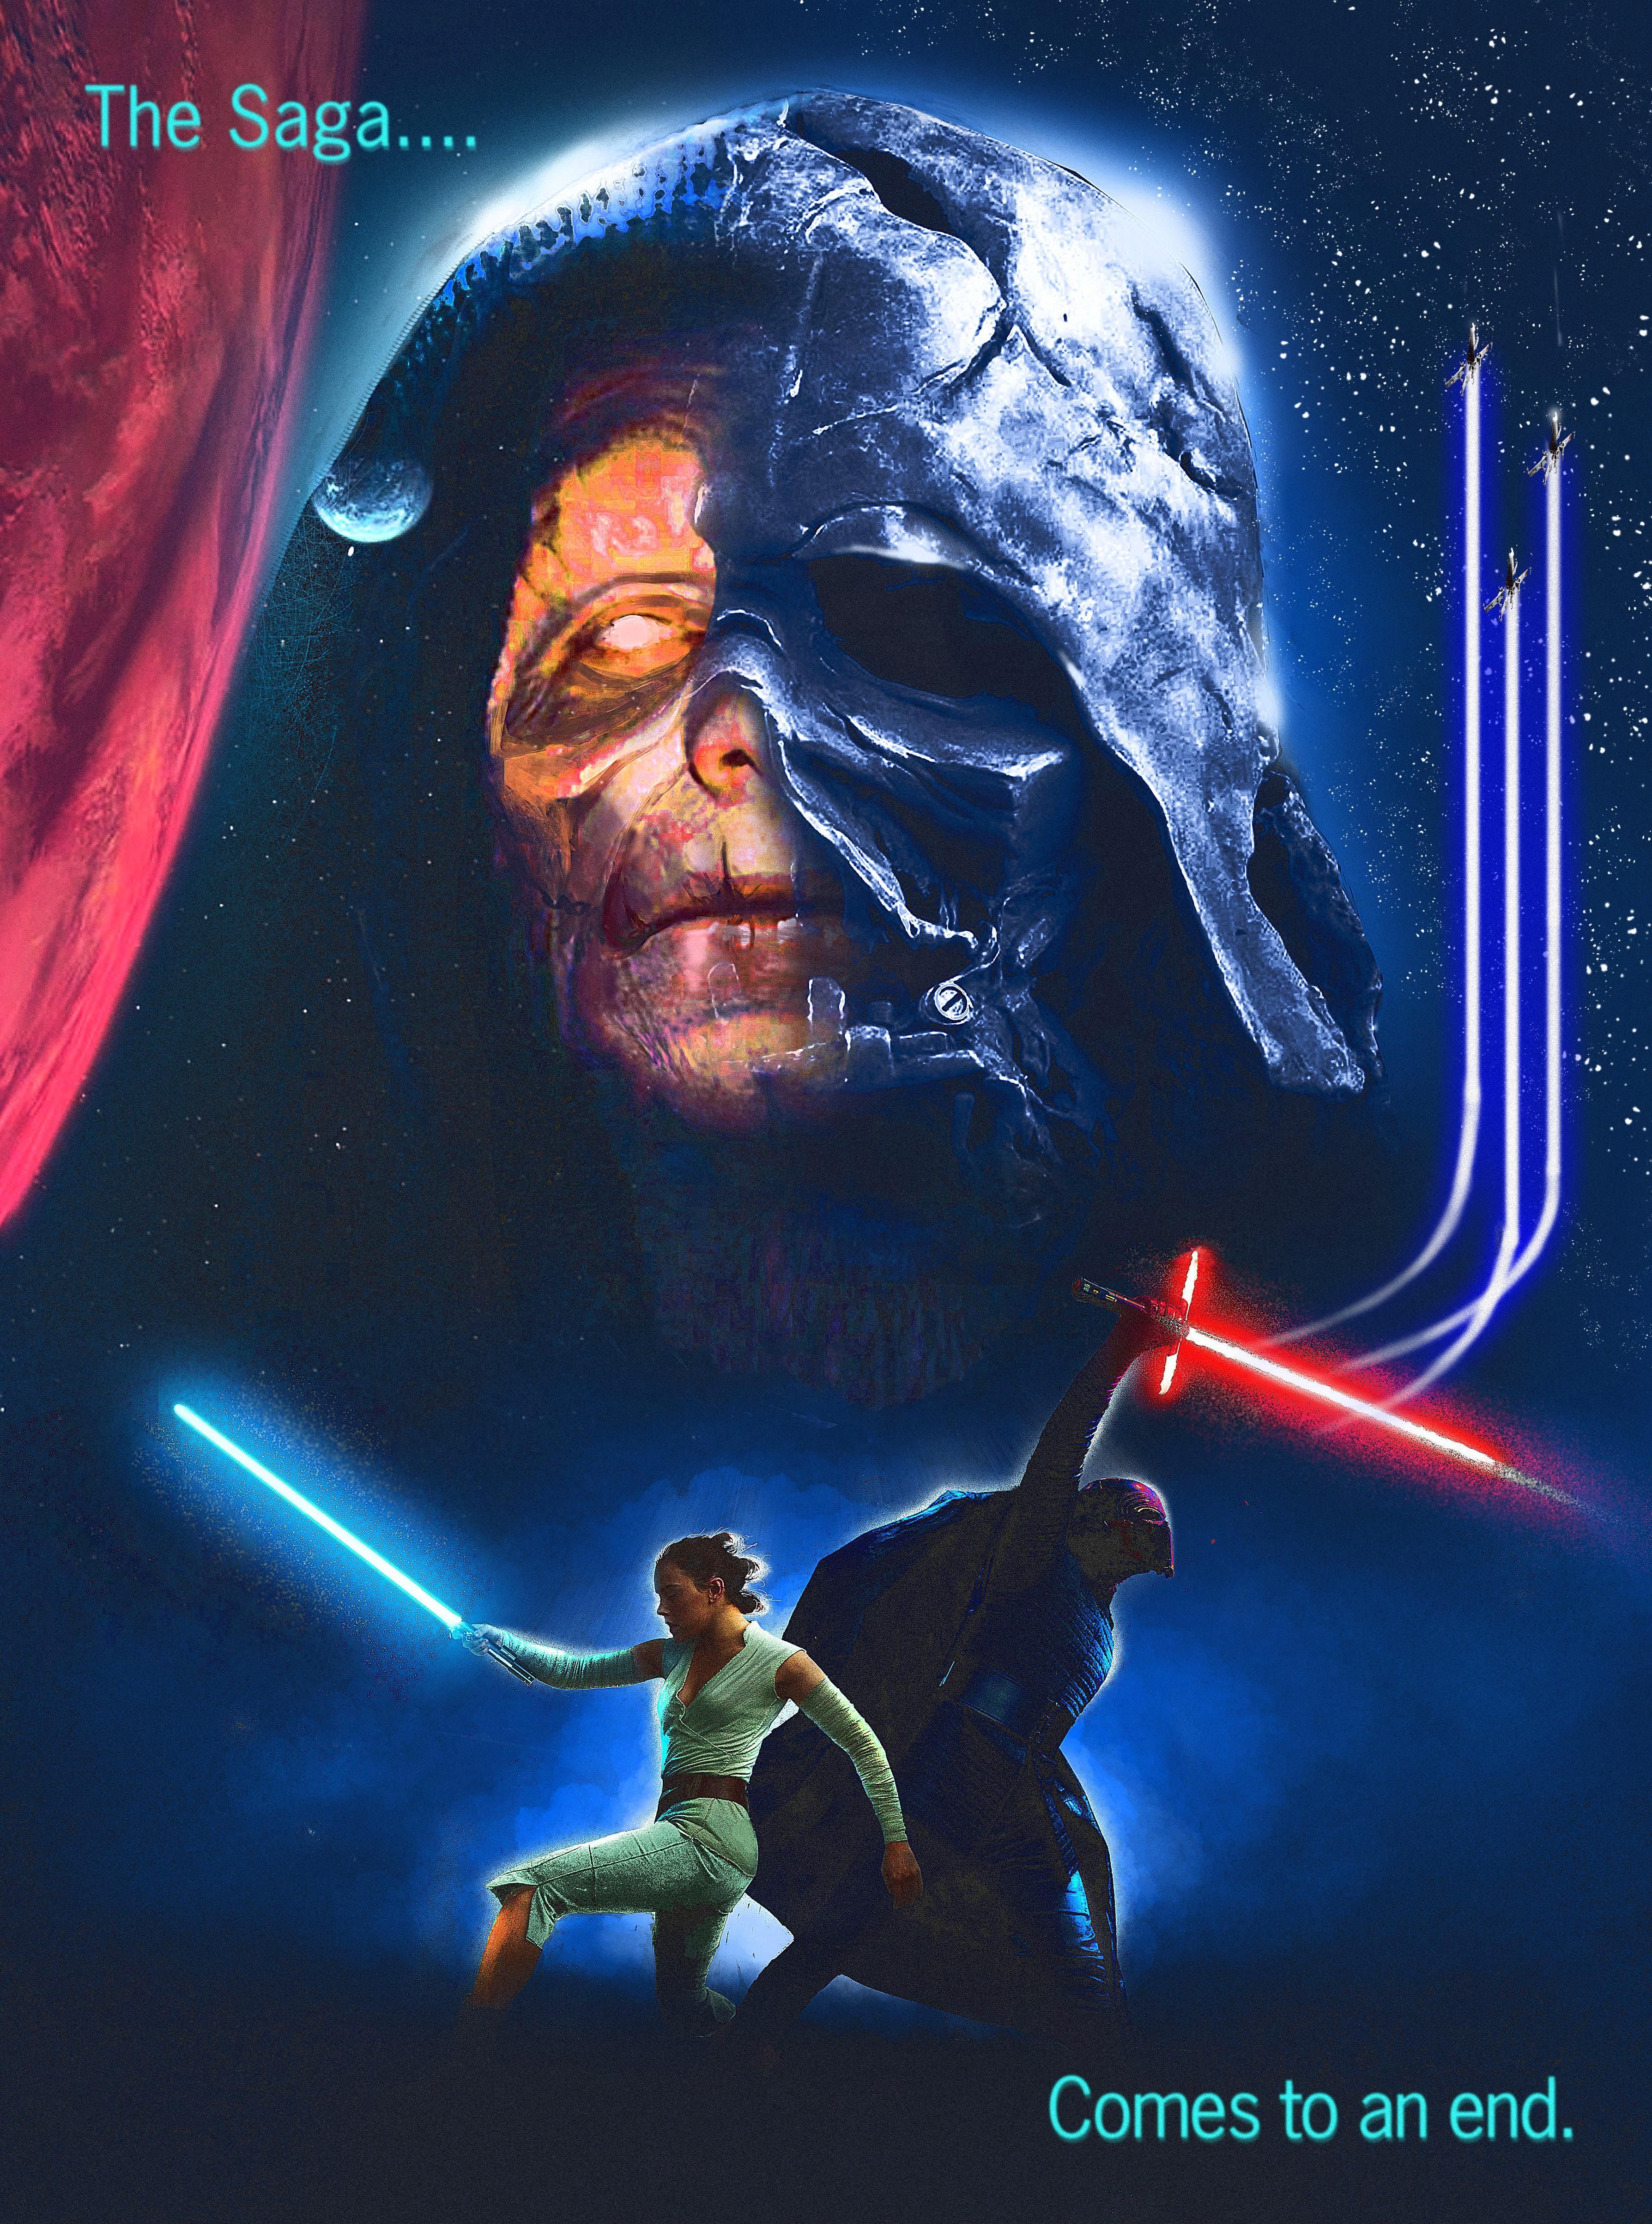 My 80's inspired Rise of Skywalker Poster, starwarsspeculation. Star wars picture, Star wars movies posters, Star wars artwork